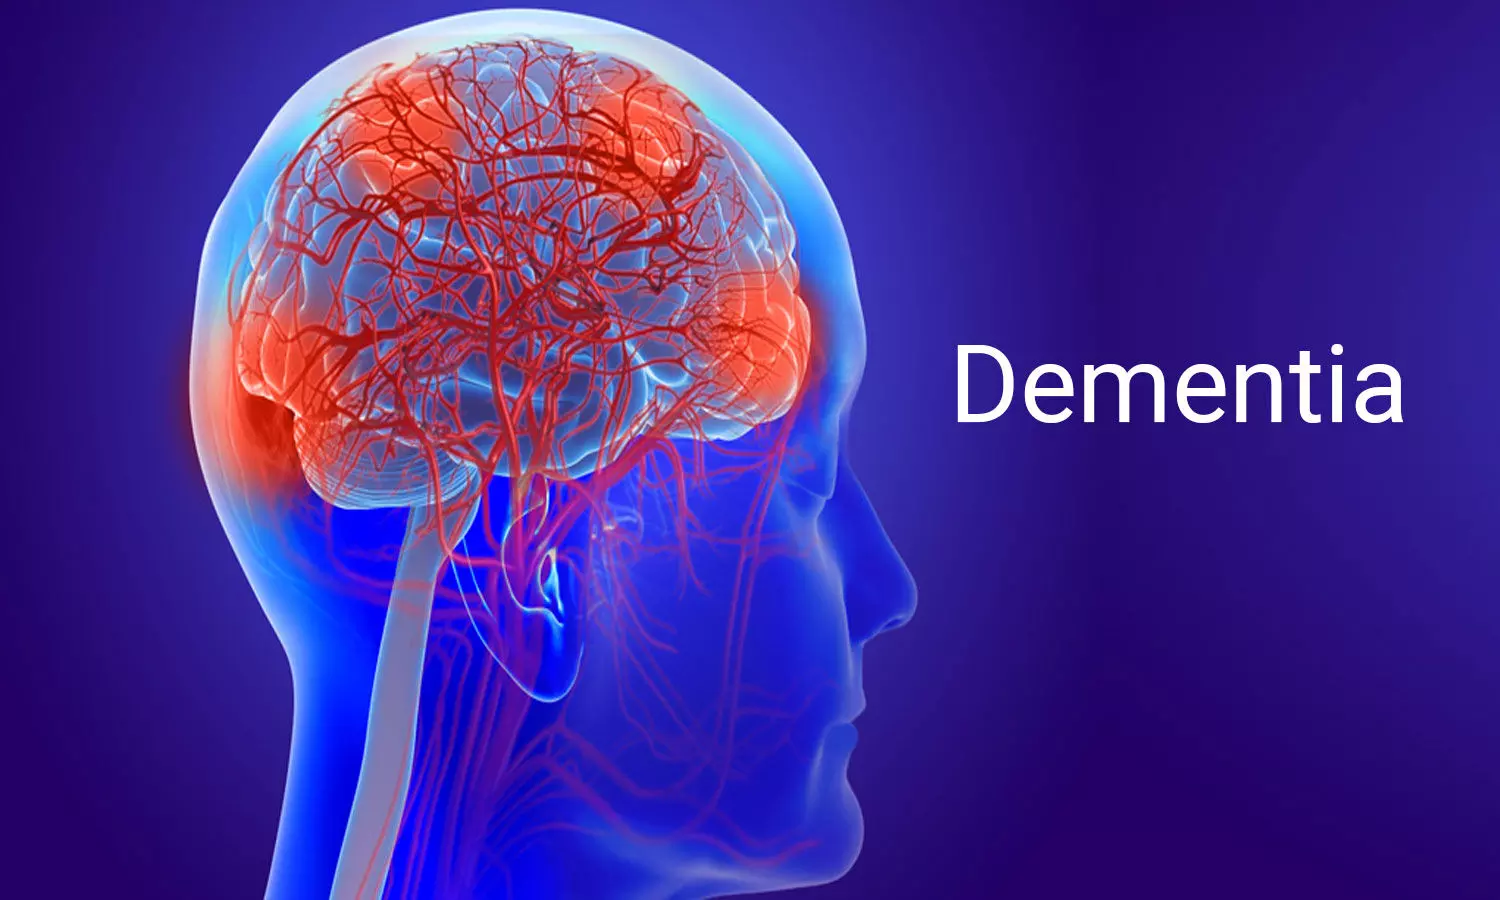 High vitamin D intake decreases dementia risk, finds study